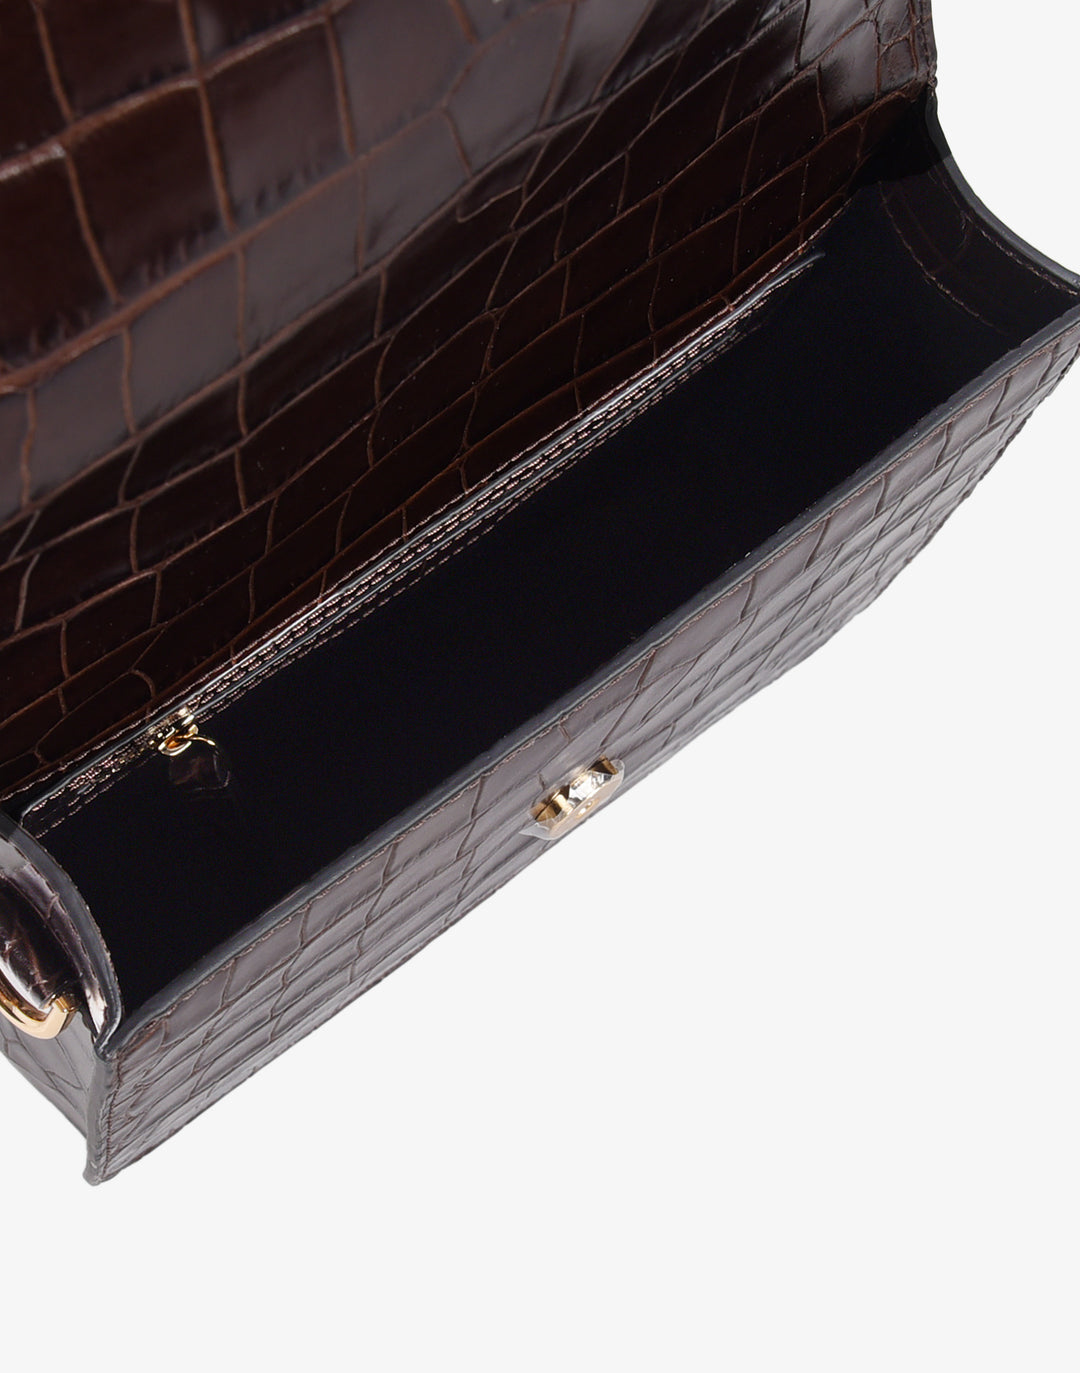 hyer goods recycled leather crossbody satchel bag DARK BROWN CHOCOLATE crocodile #color_choco-croco